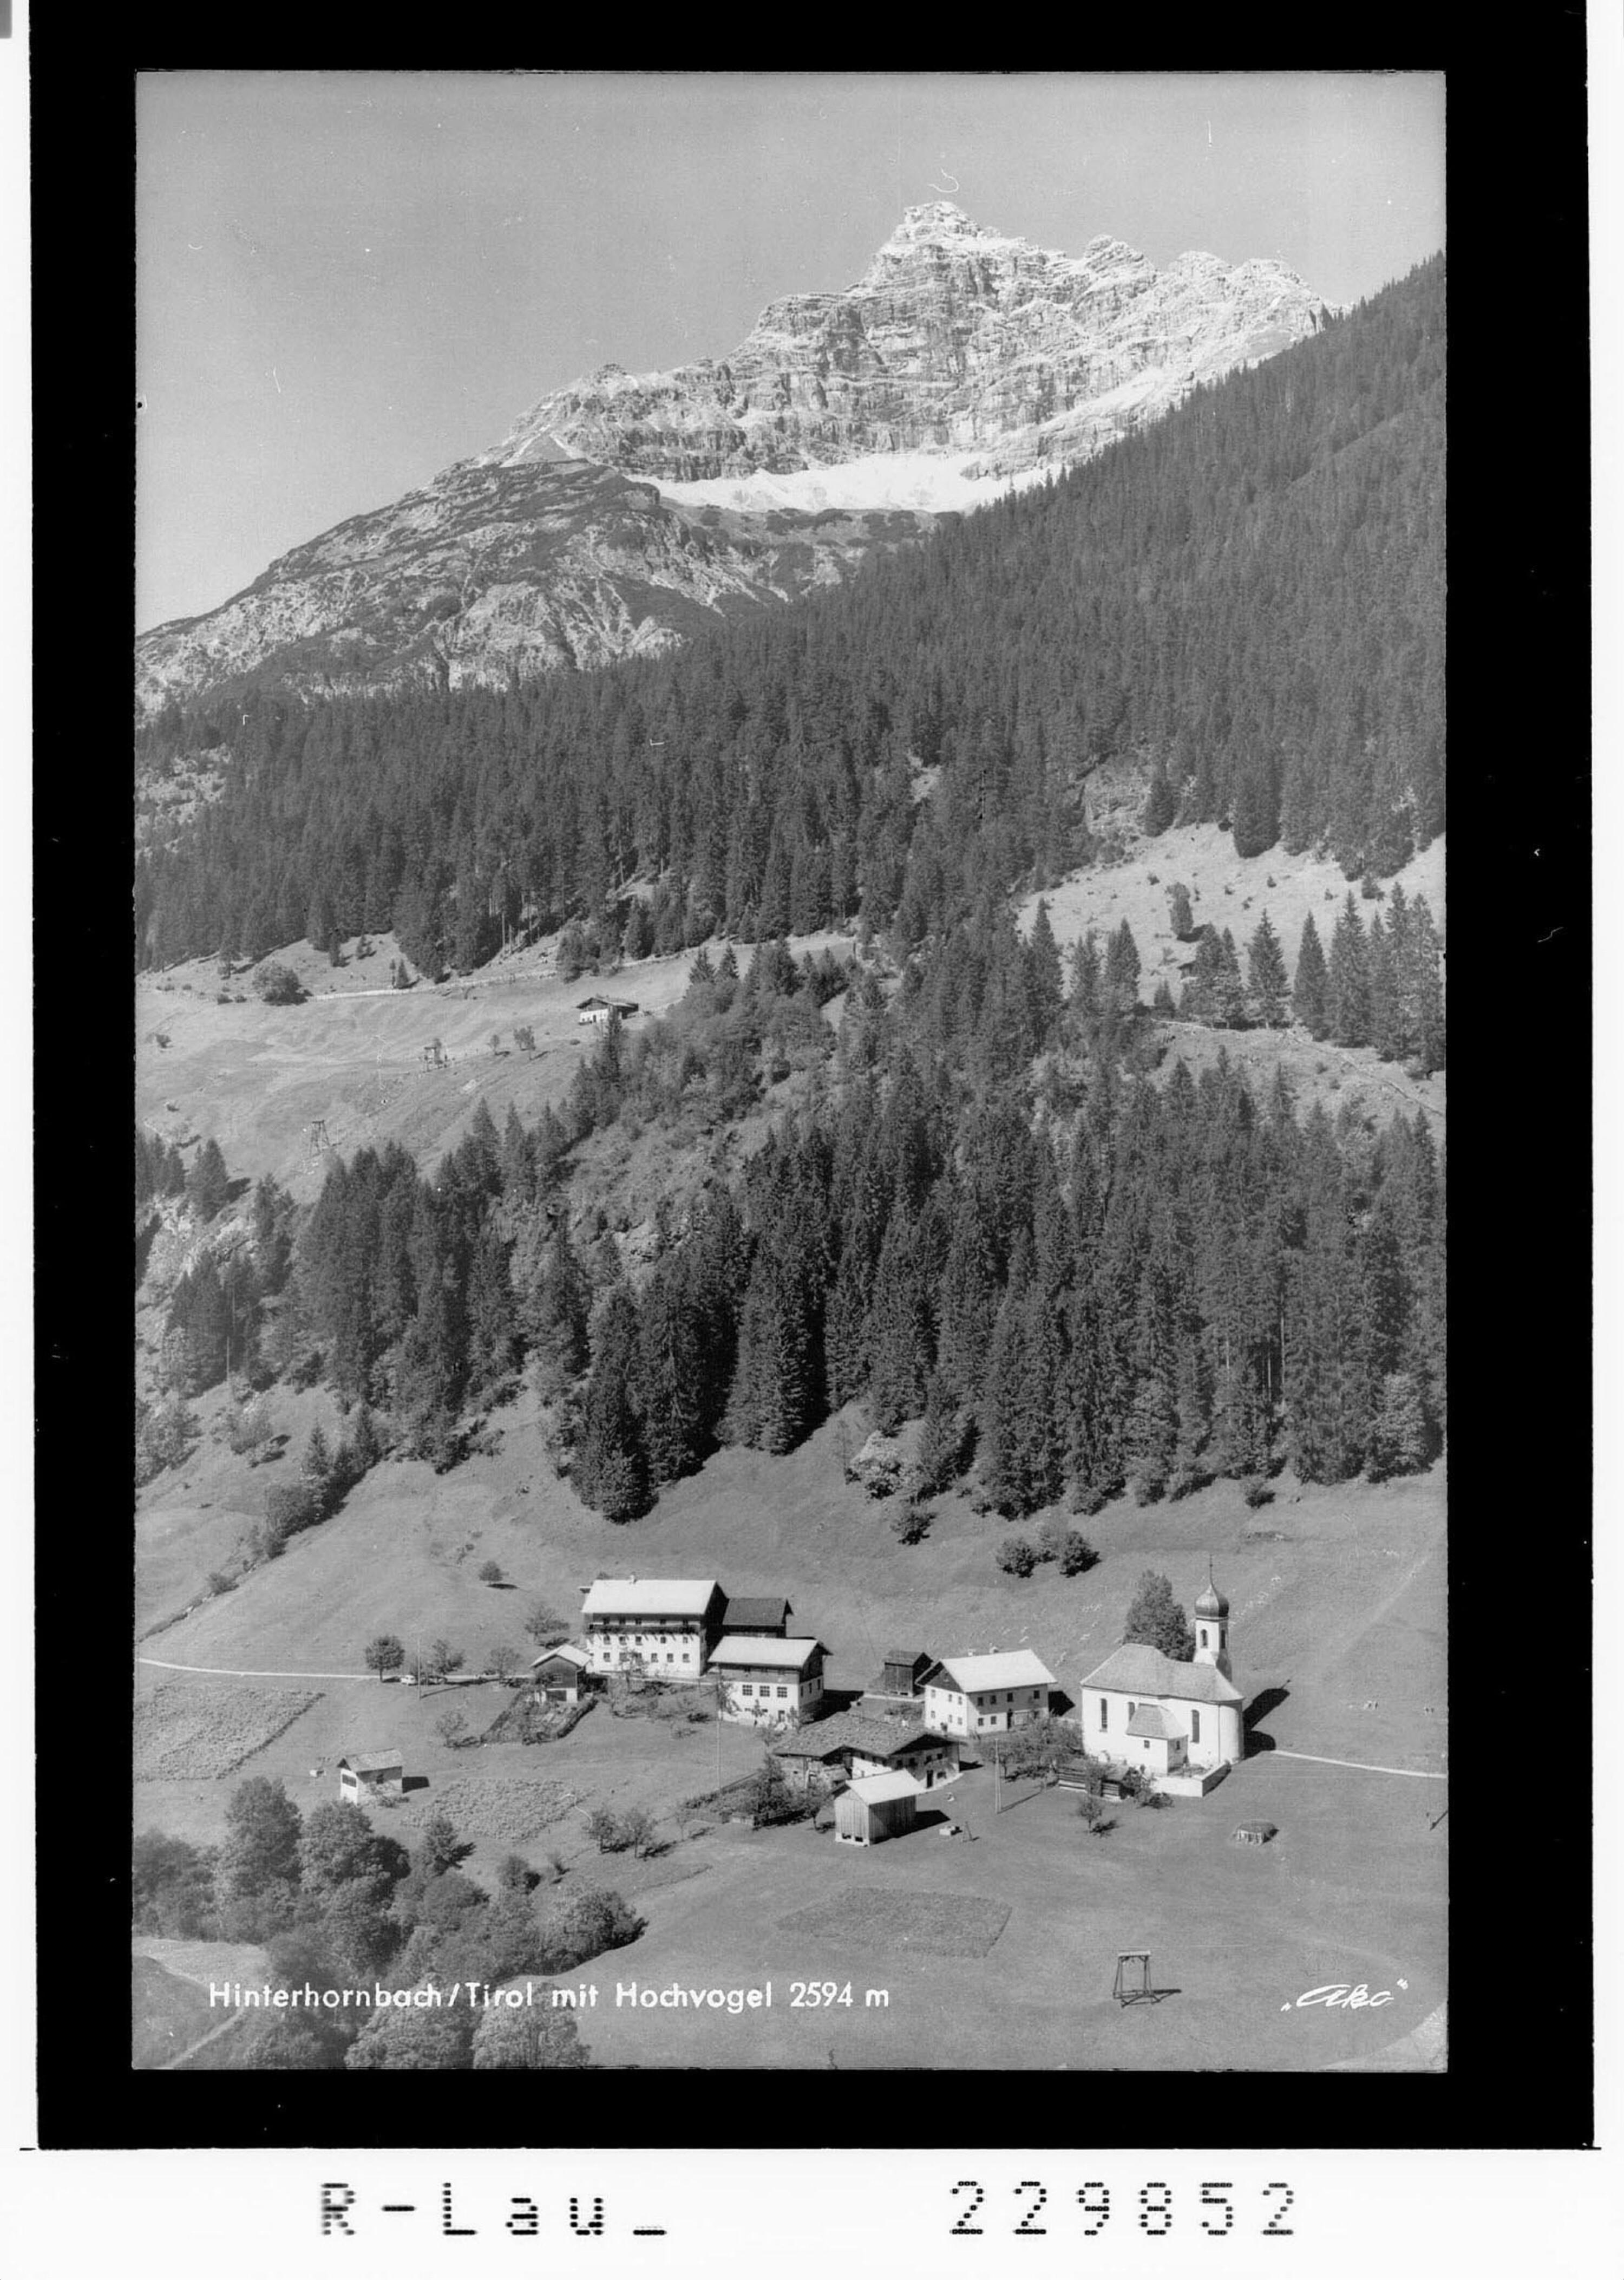 Hinterhornbach / Tirol 1101 m mit Hochvogel 2593 m></div>


    <hr>
    <div class=